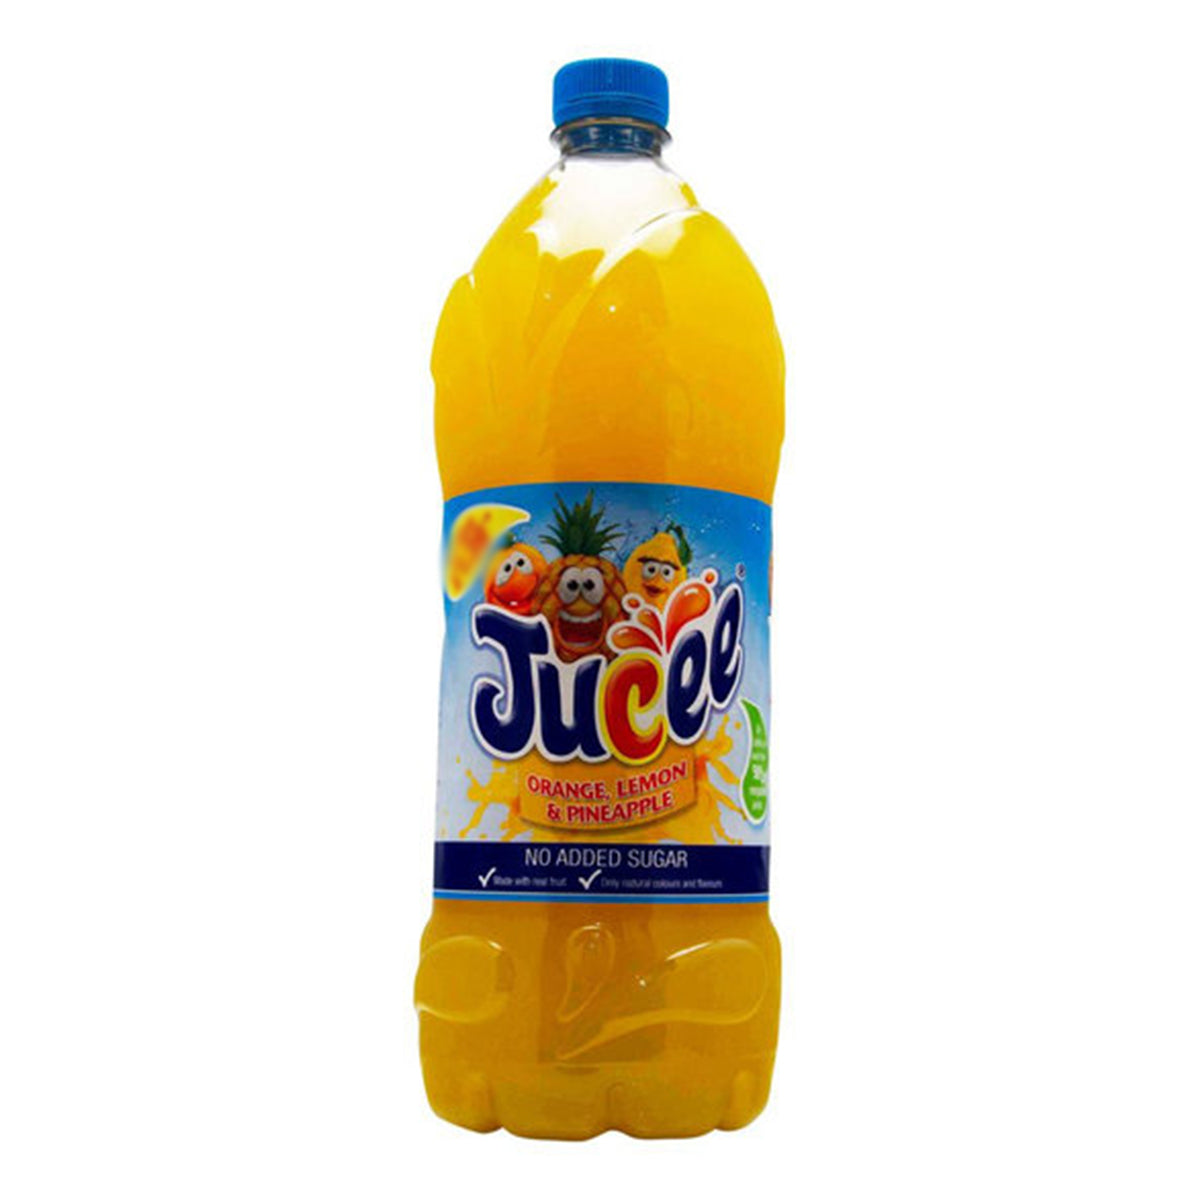 Jucee - Orange Lemon & Pineapple - 1.5L - Continental Food Store